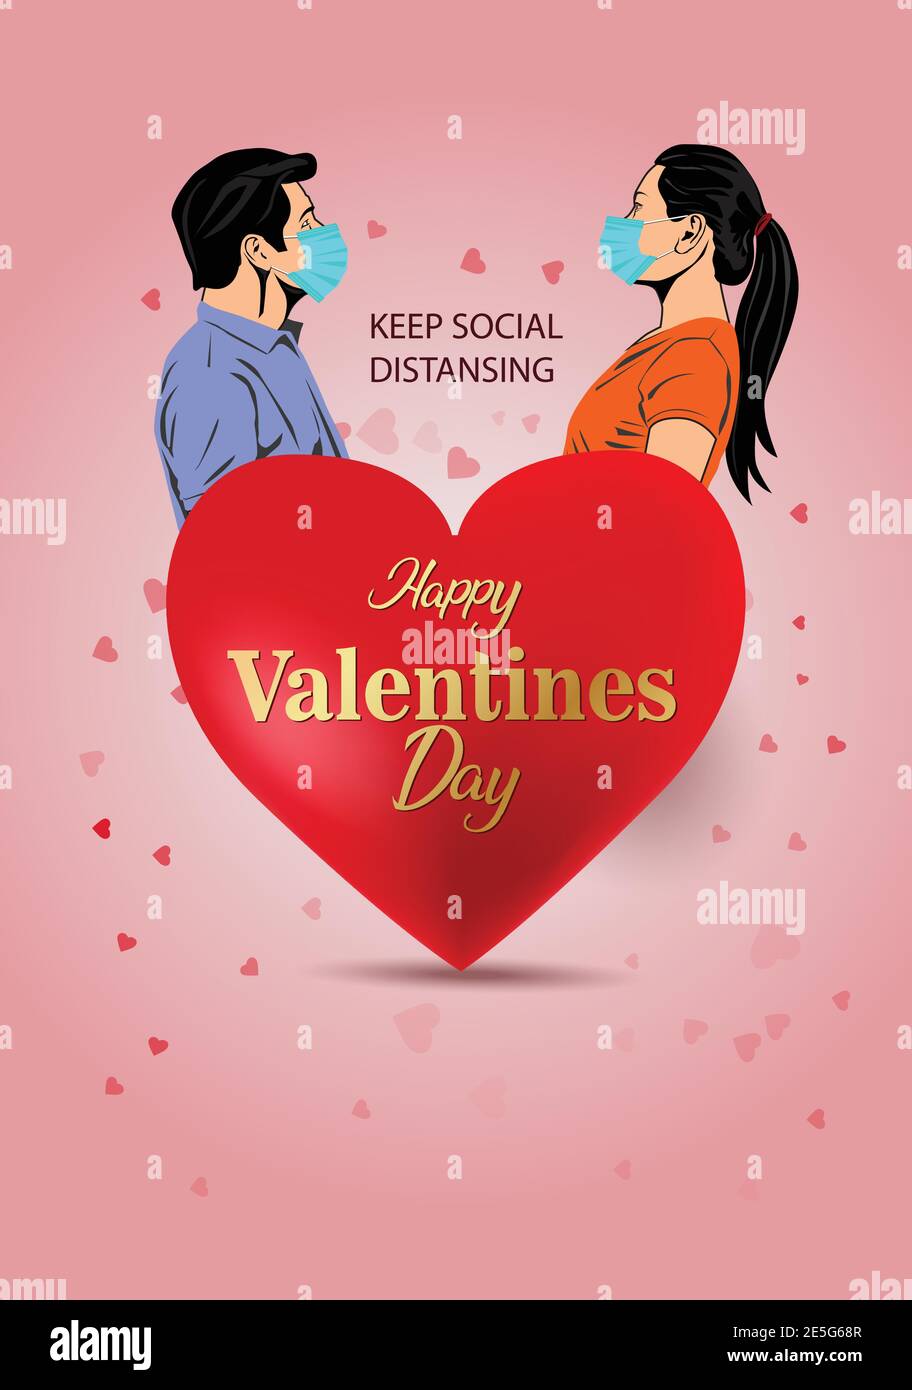 Happy valentine's day Poster roten Herzen mit Paar trägt Gesichtsmaske. Covid-19, coronavirus Konzept. vektor-Illustration Design Stock Vektor